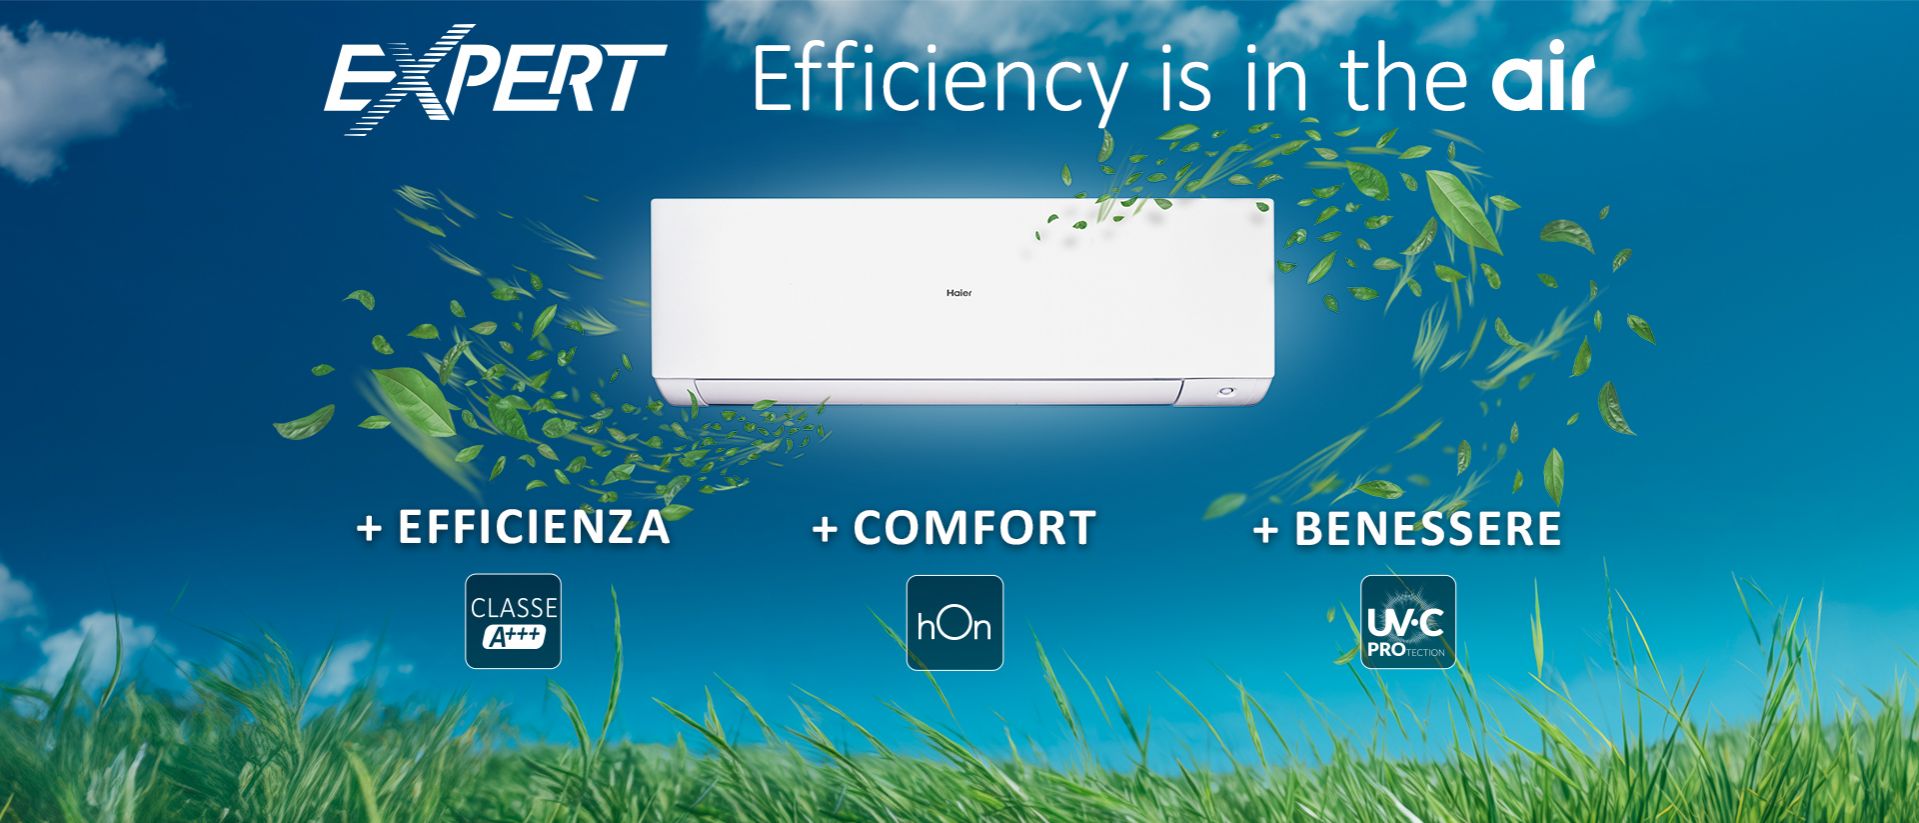 Haier Conditionatori lancia la sua nuova campagna: Expert - Efficiency is in the Air